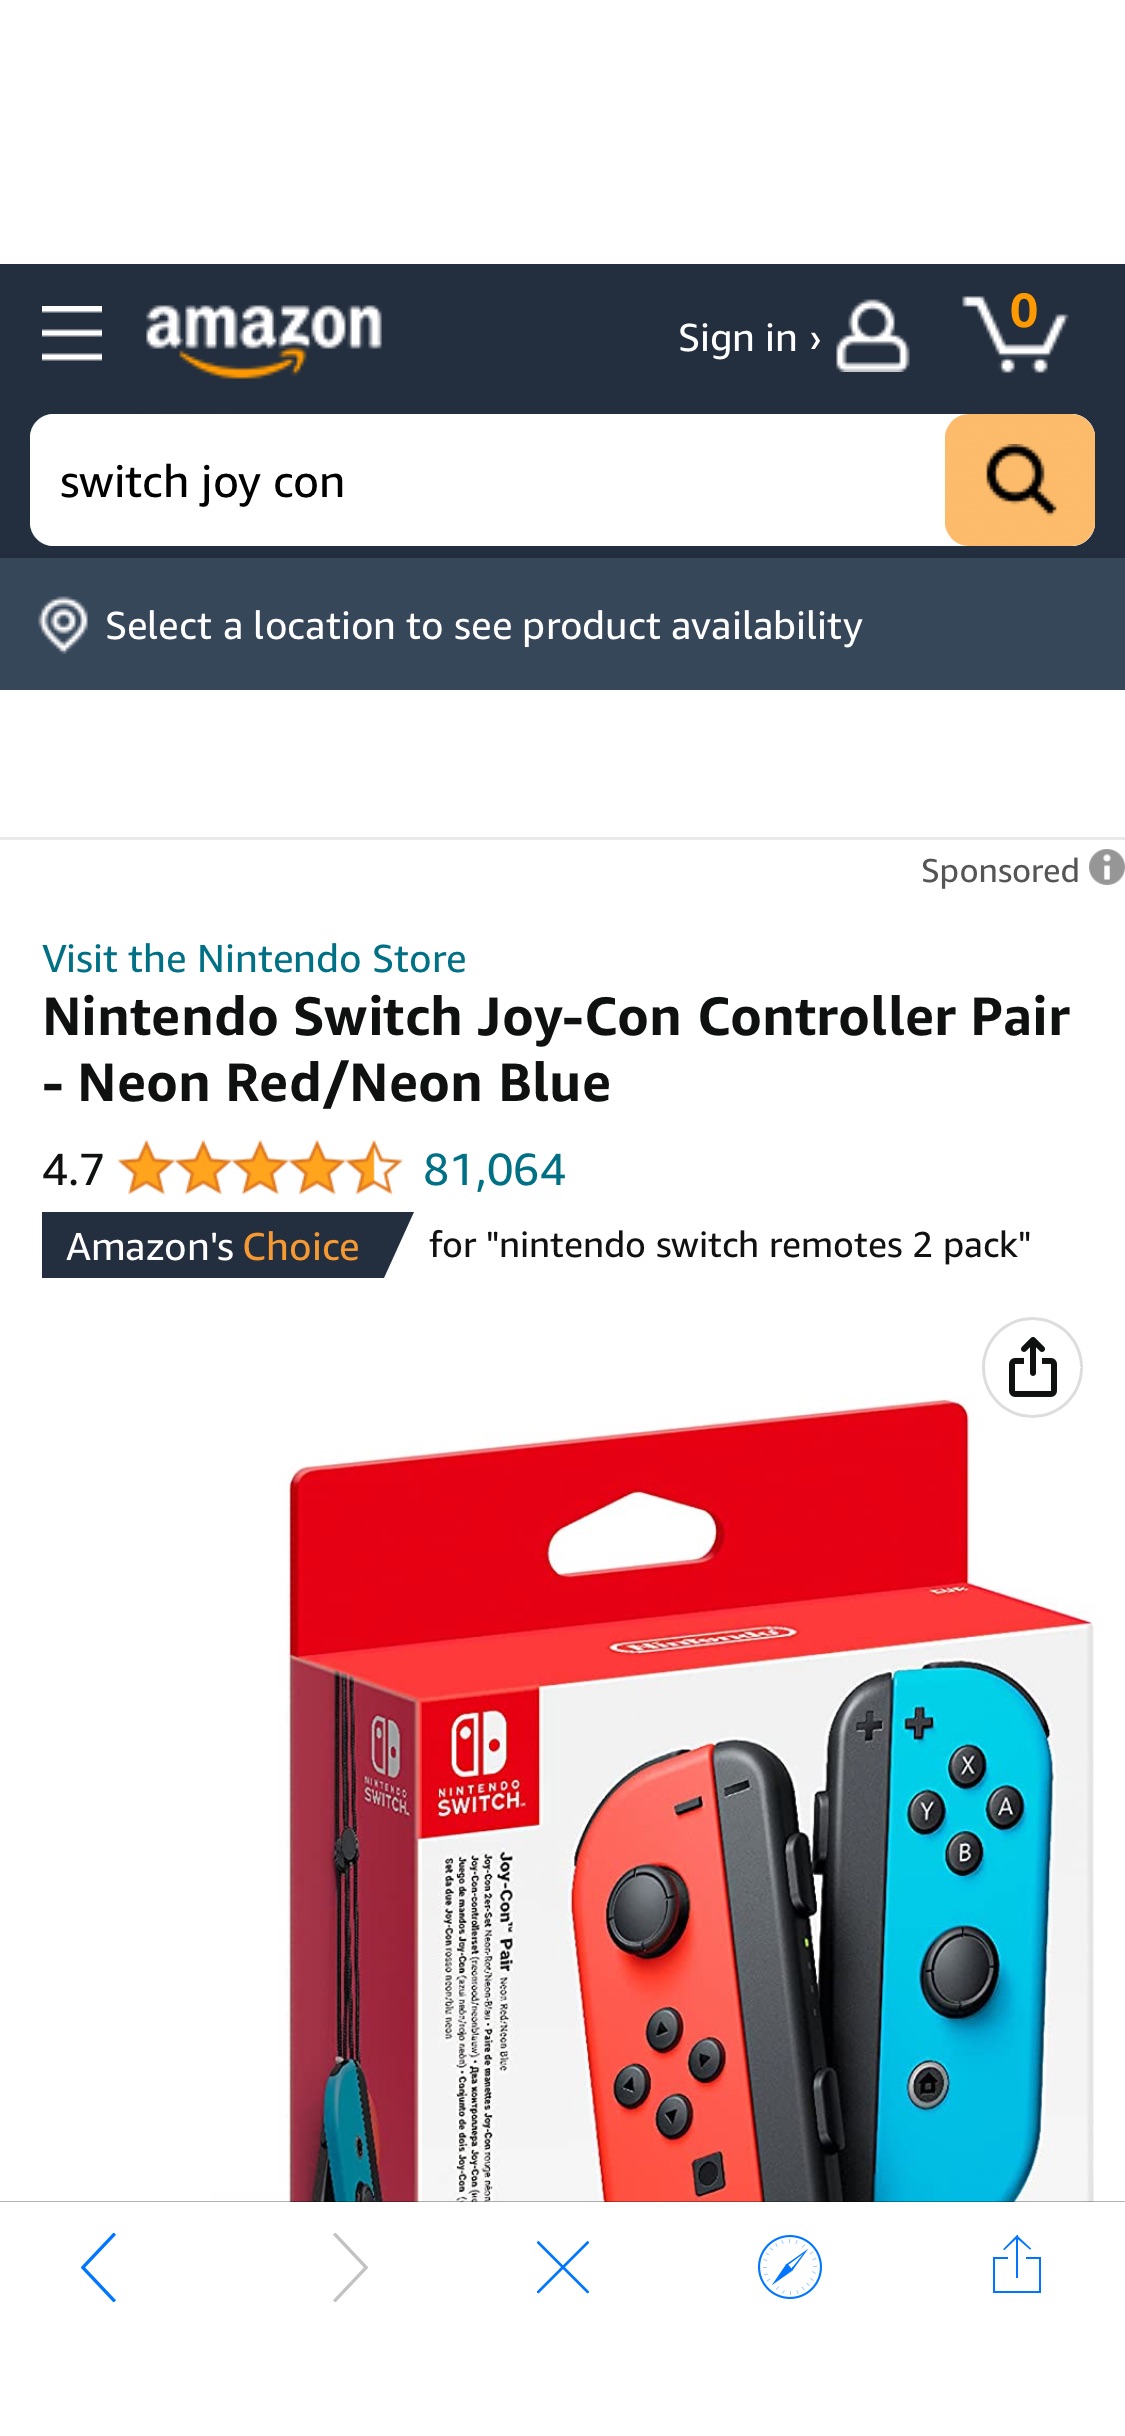 Amazon.com: Nintendo Switch Joy-Con Controller Pair - Neon Red/Neon Blue : Video Games